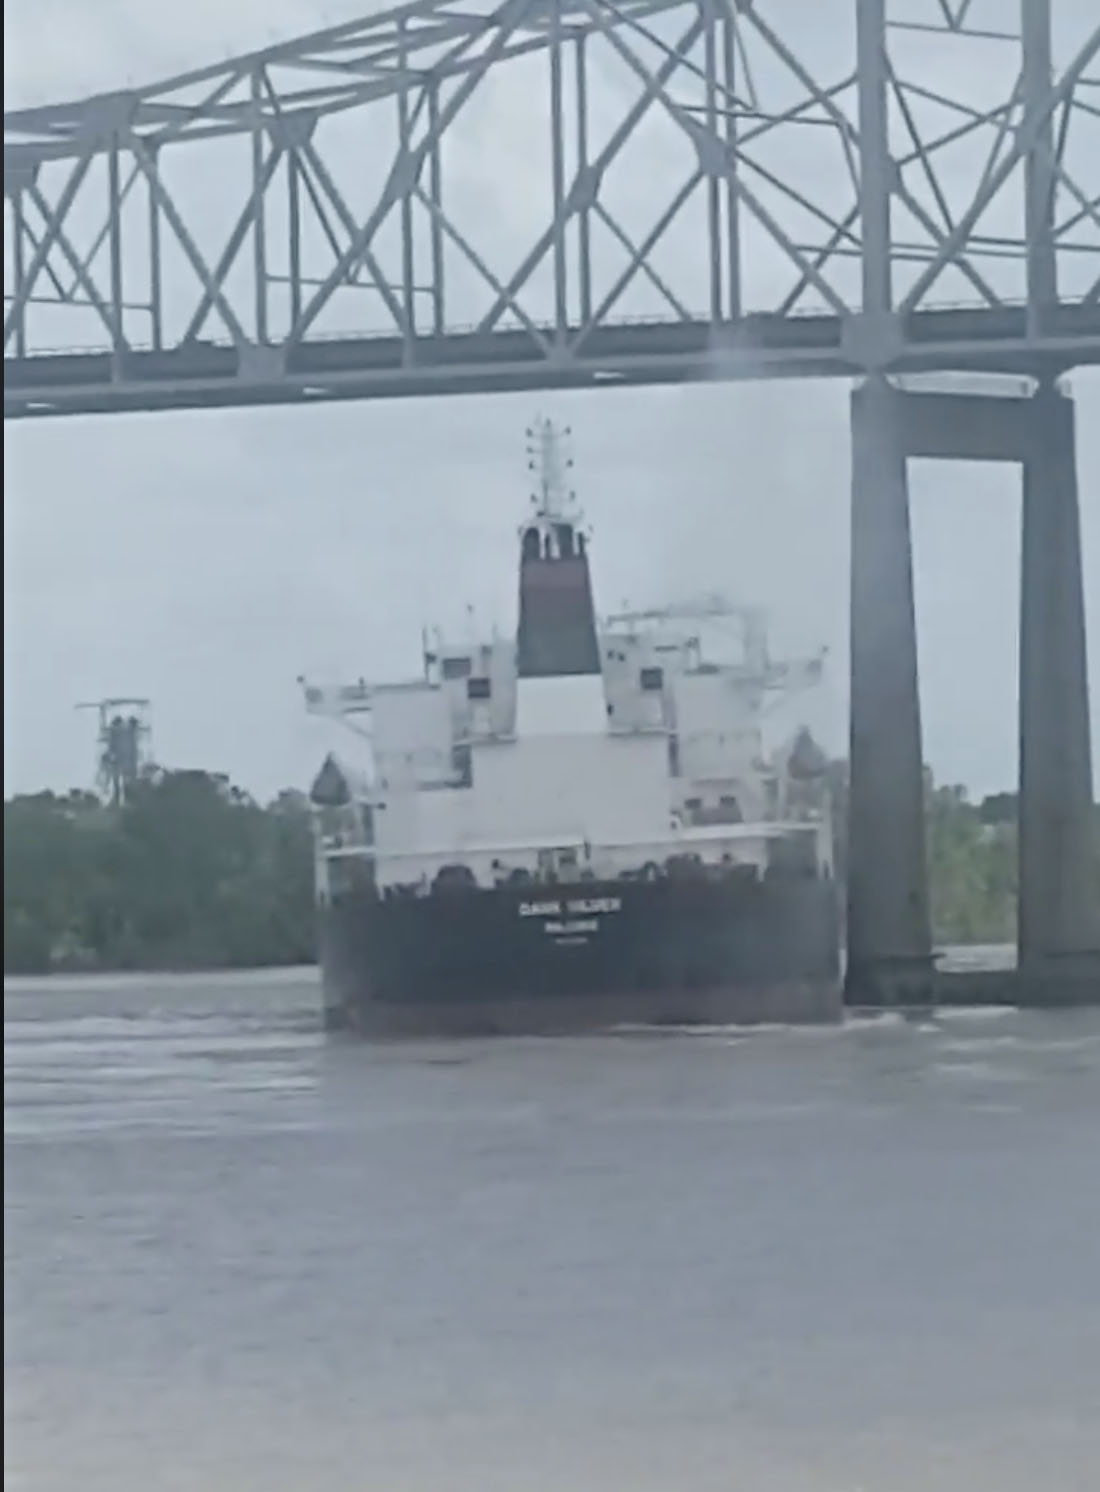 Tanker Sideswipes Girder Of Sunshine Bridge, Causing Brief Closure